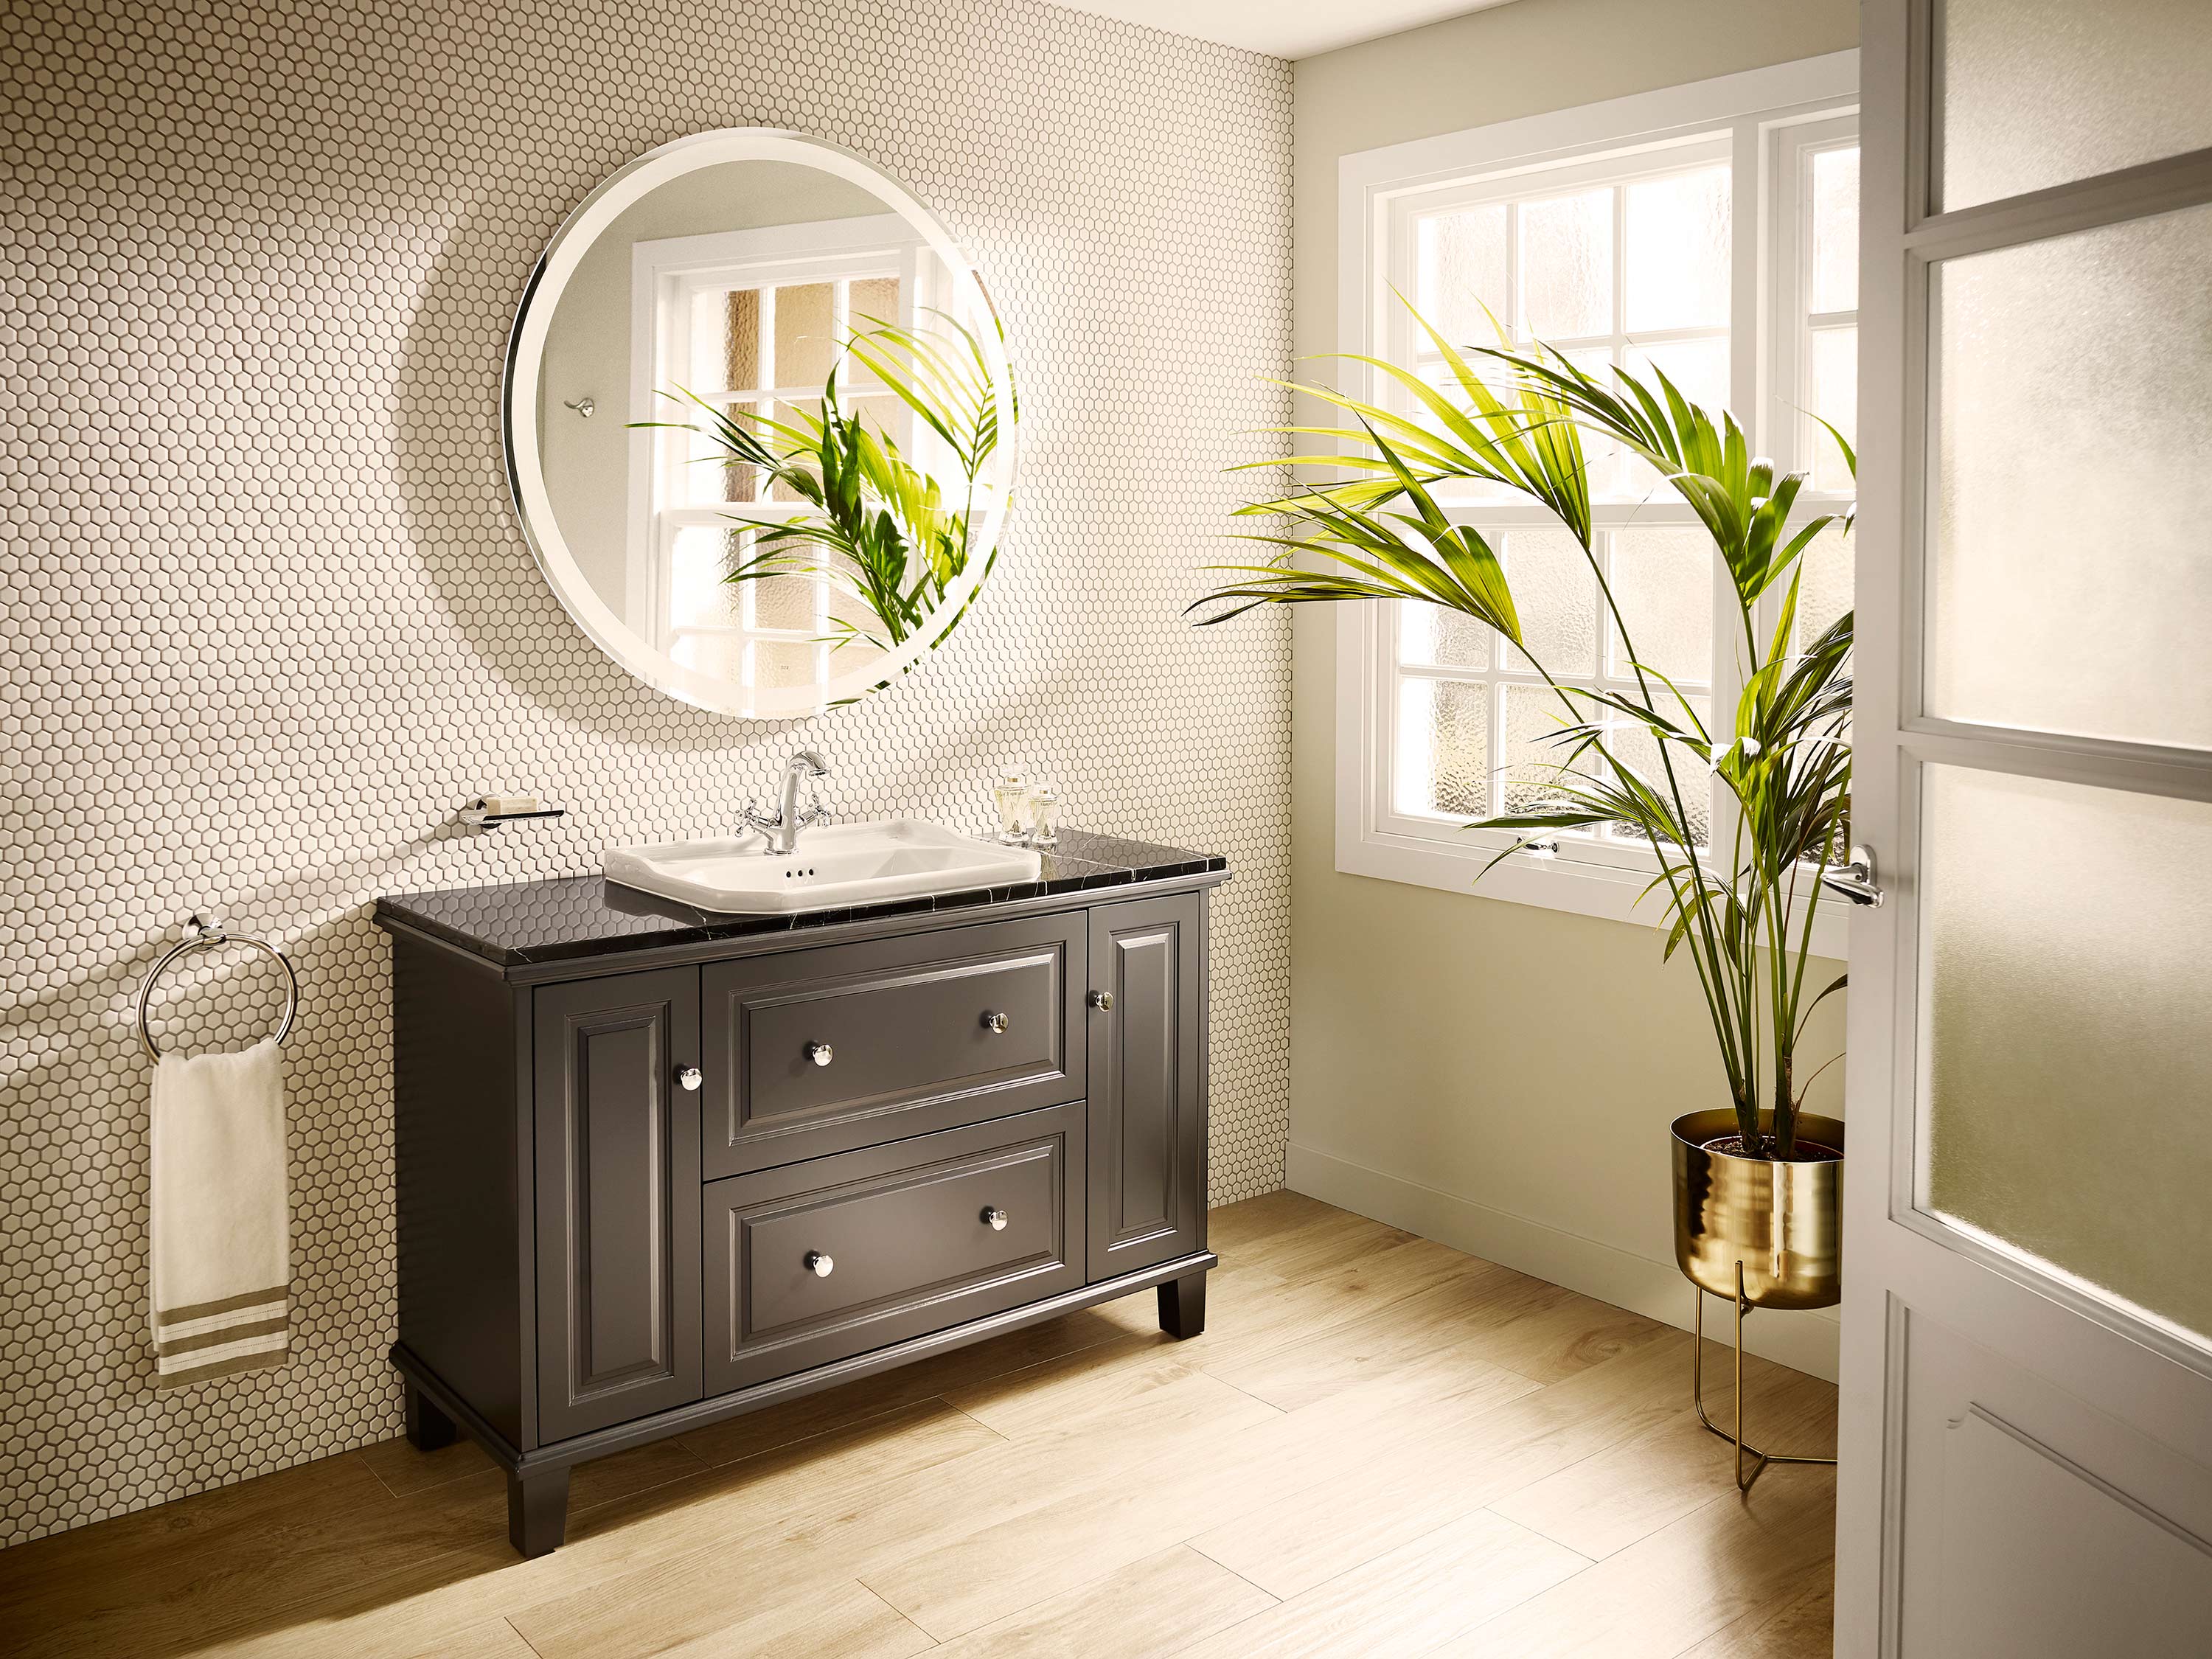 Rustic bathroom furniture with modern & stylish design | Roca Life